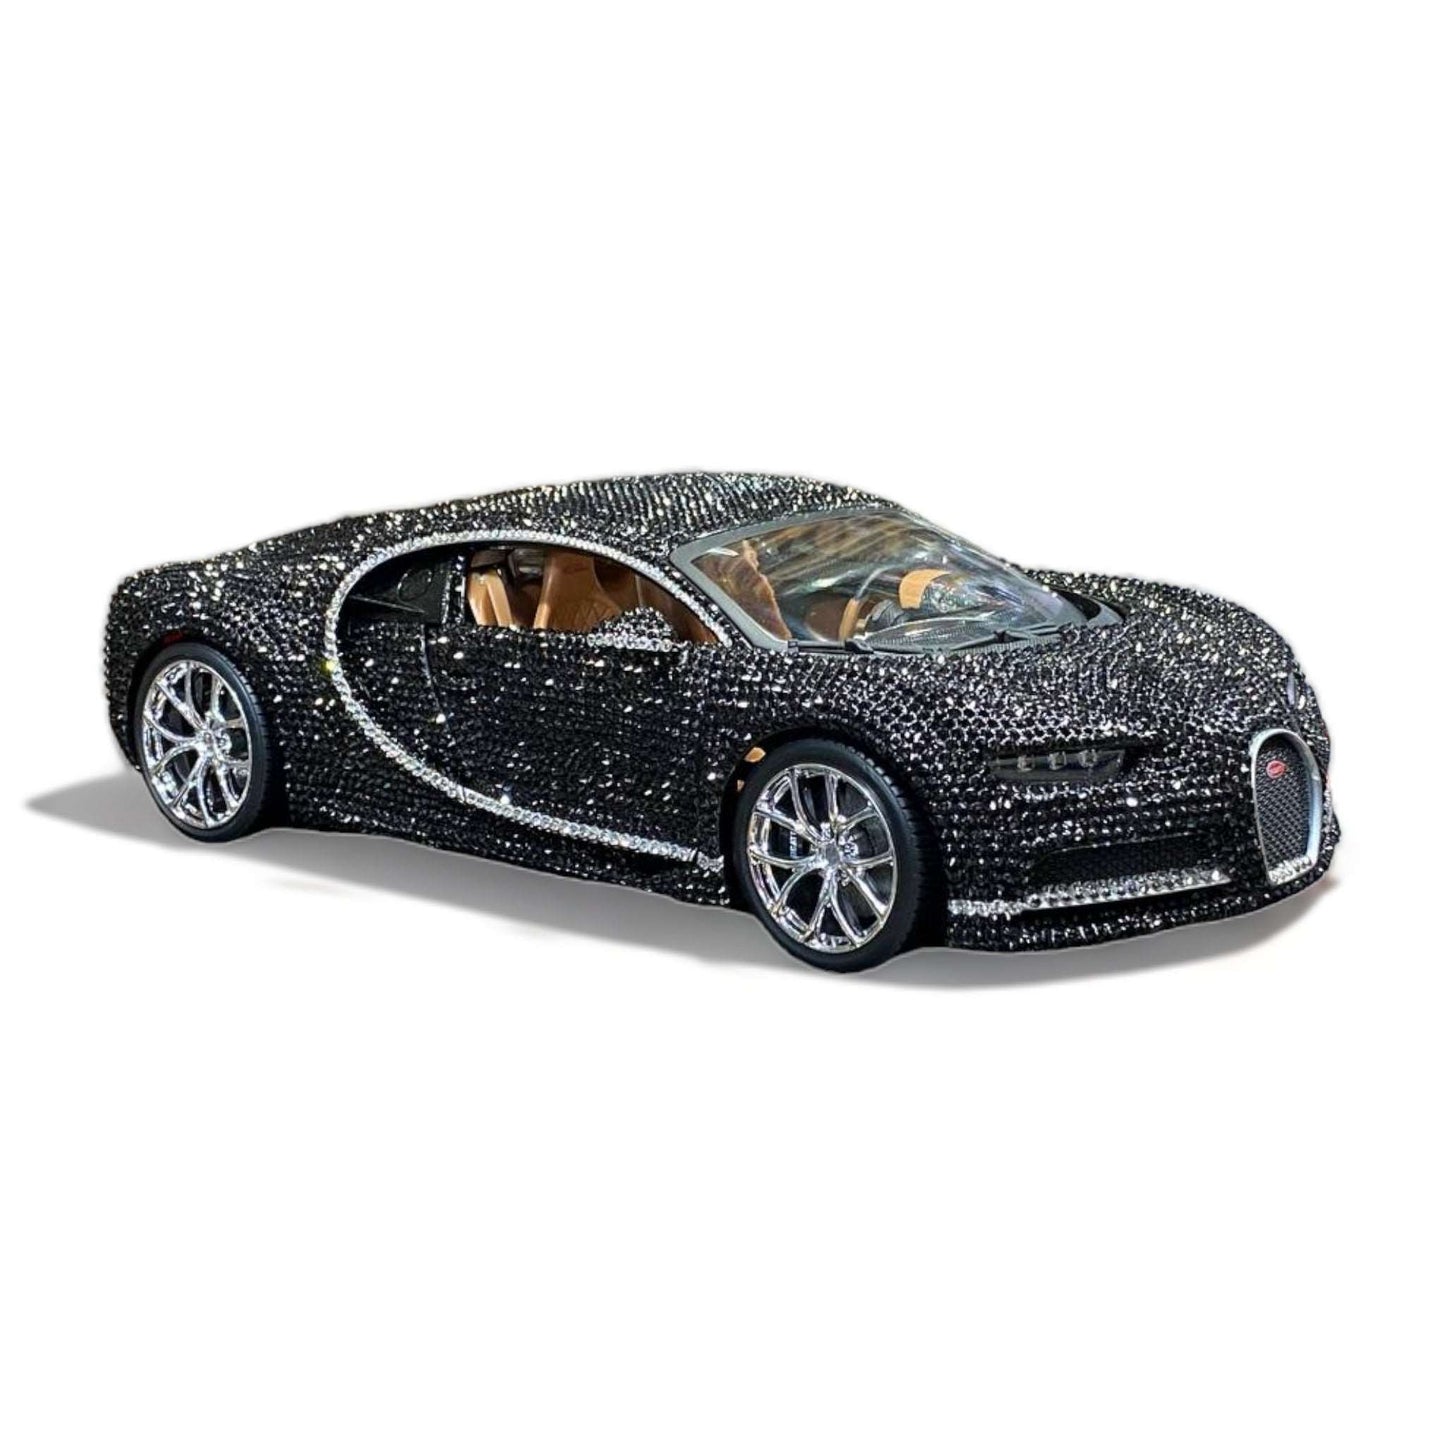 1/18 Diecast Bugatti Chiron Swarovski Crystal color Limited Edition - Bburago Scale Model Car|Sold in Dturman.com Dubai UAE.